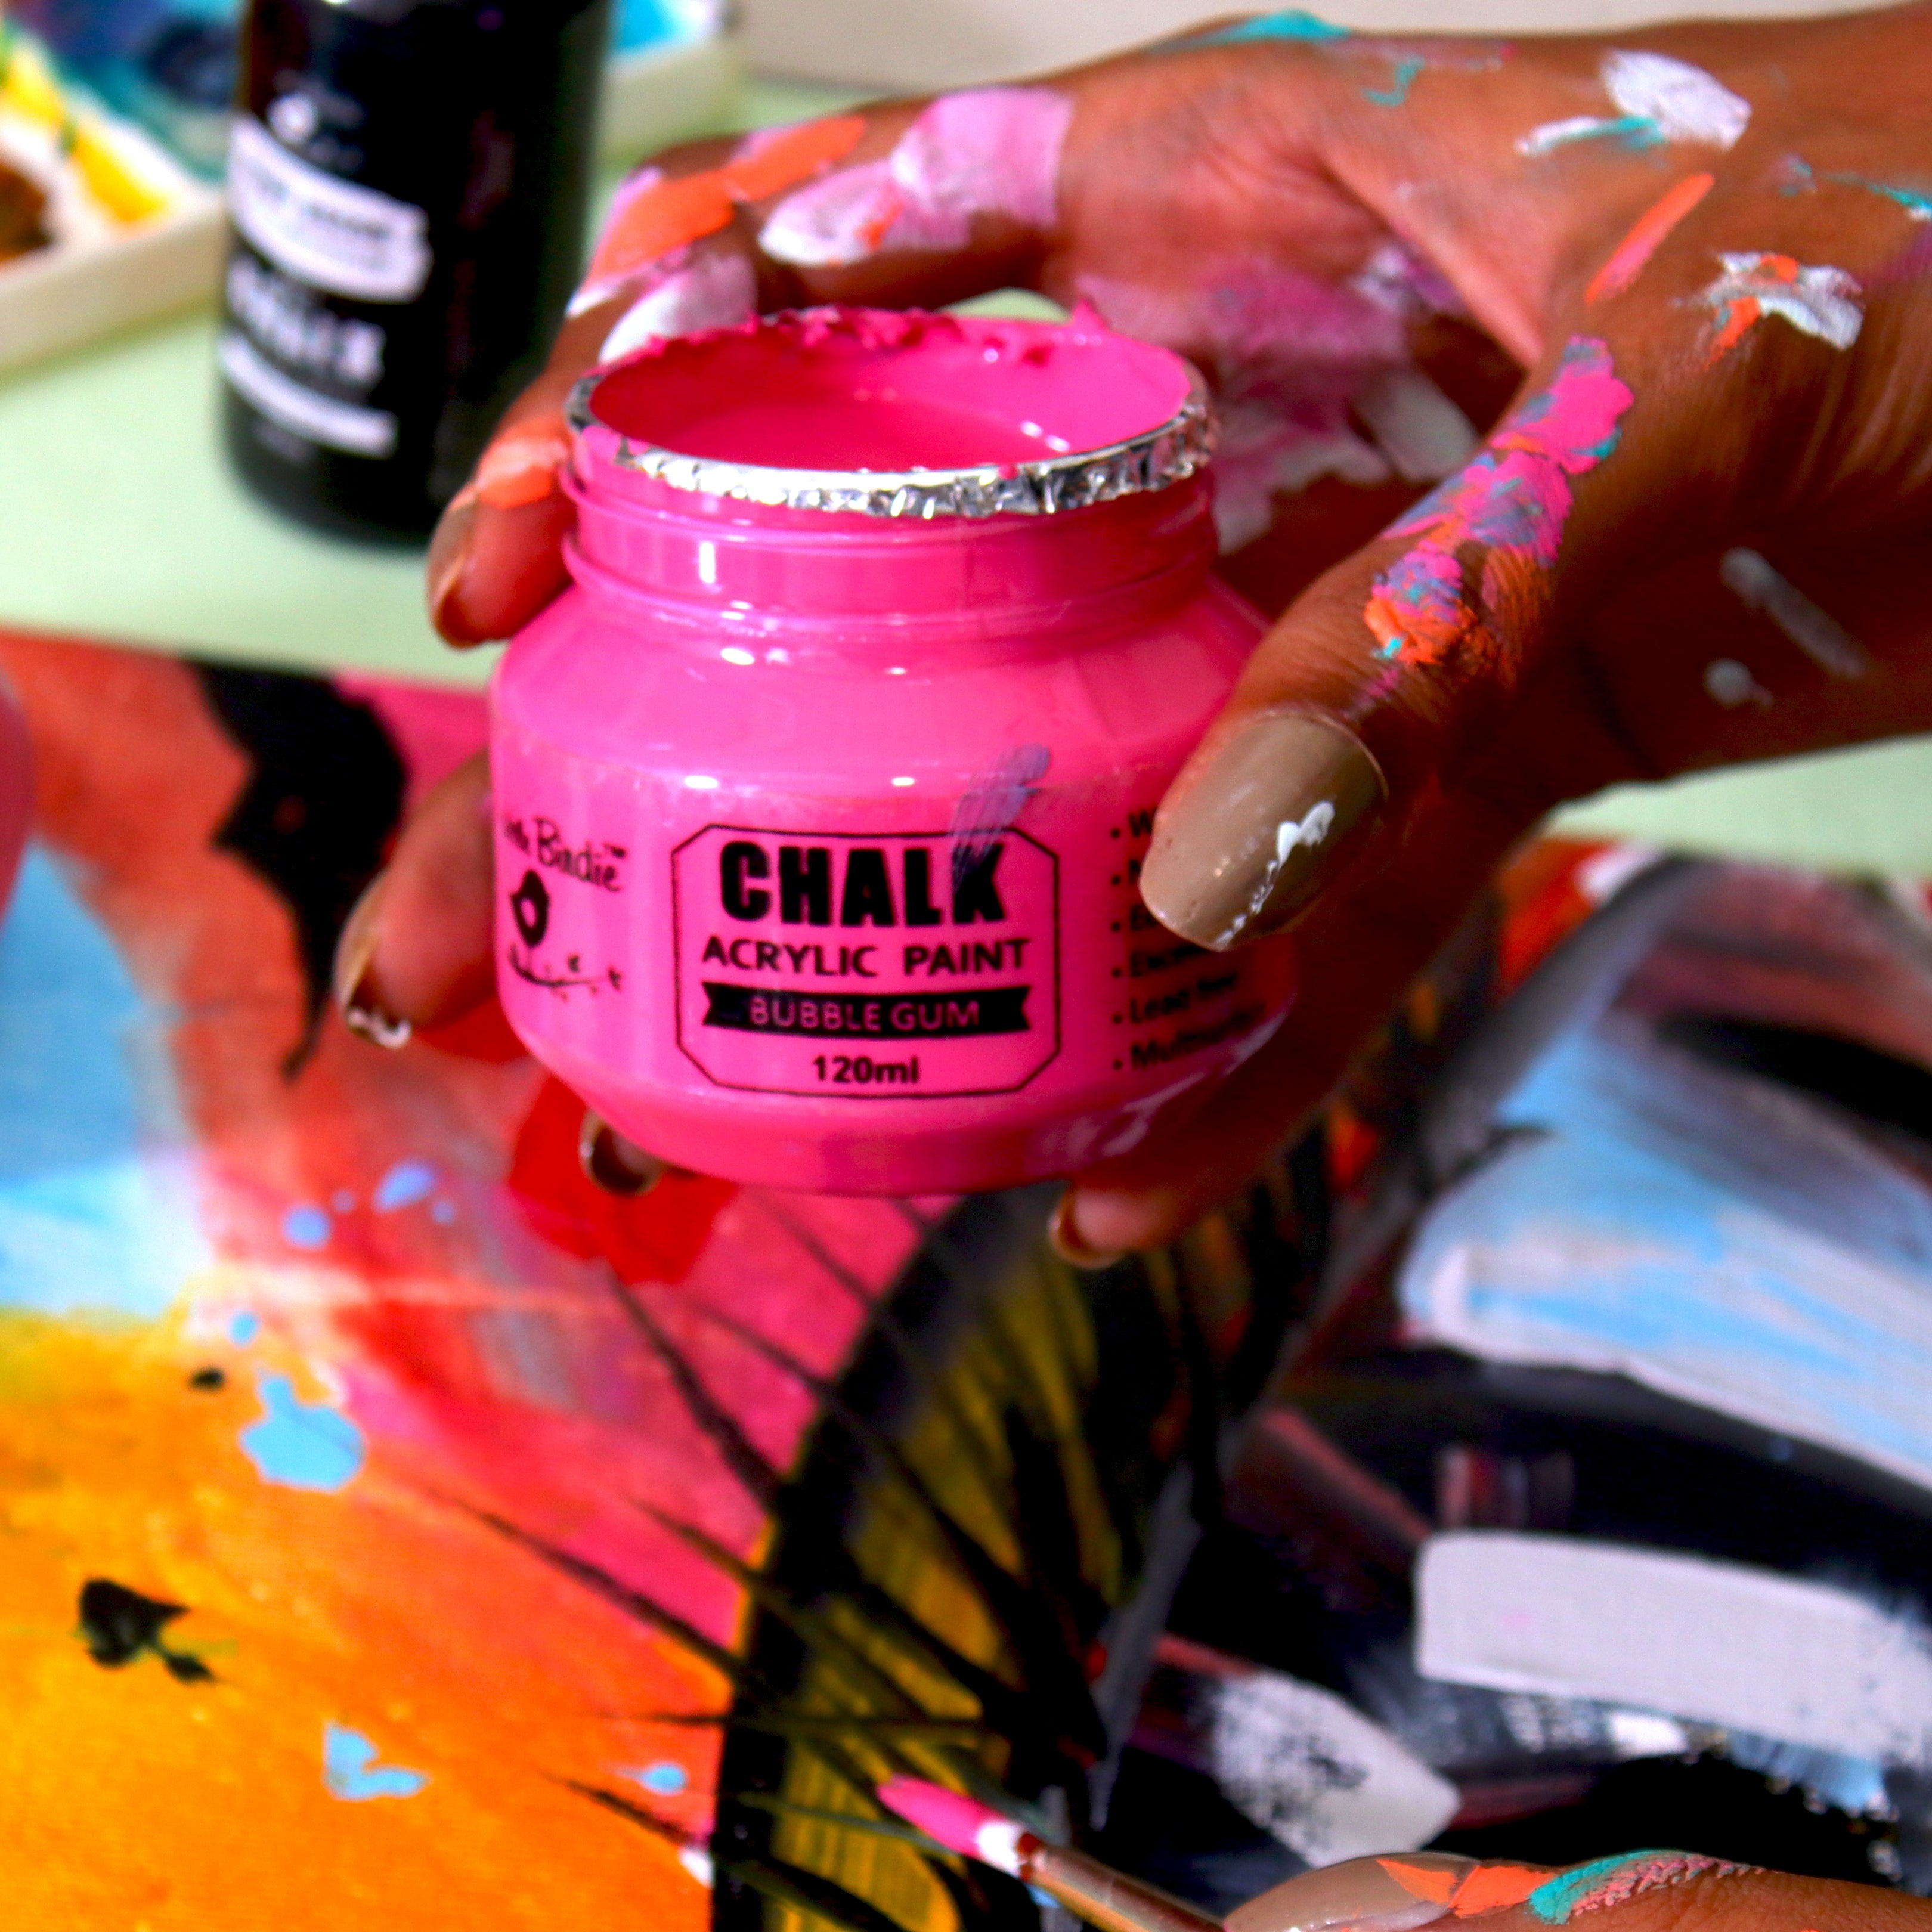 Home Decor Chalk Paint Wild Wasabi 120ml Bottle